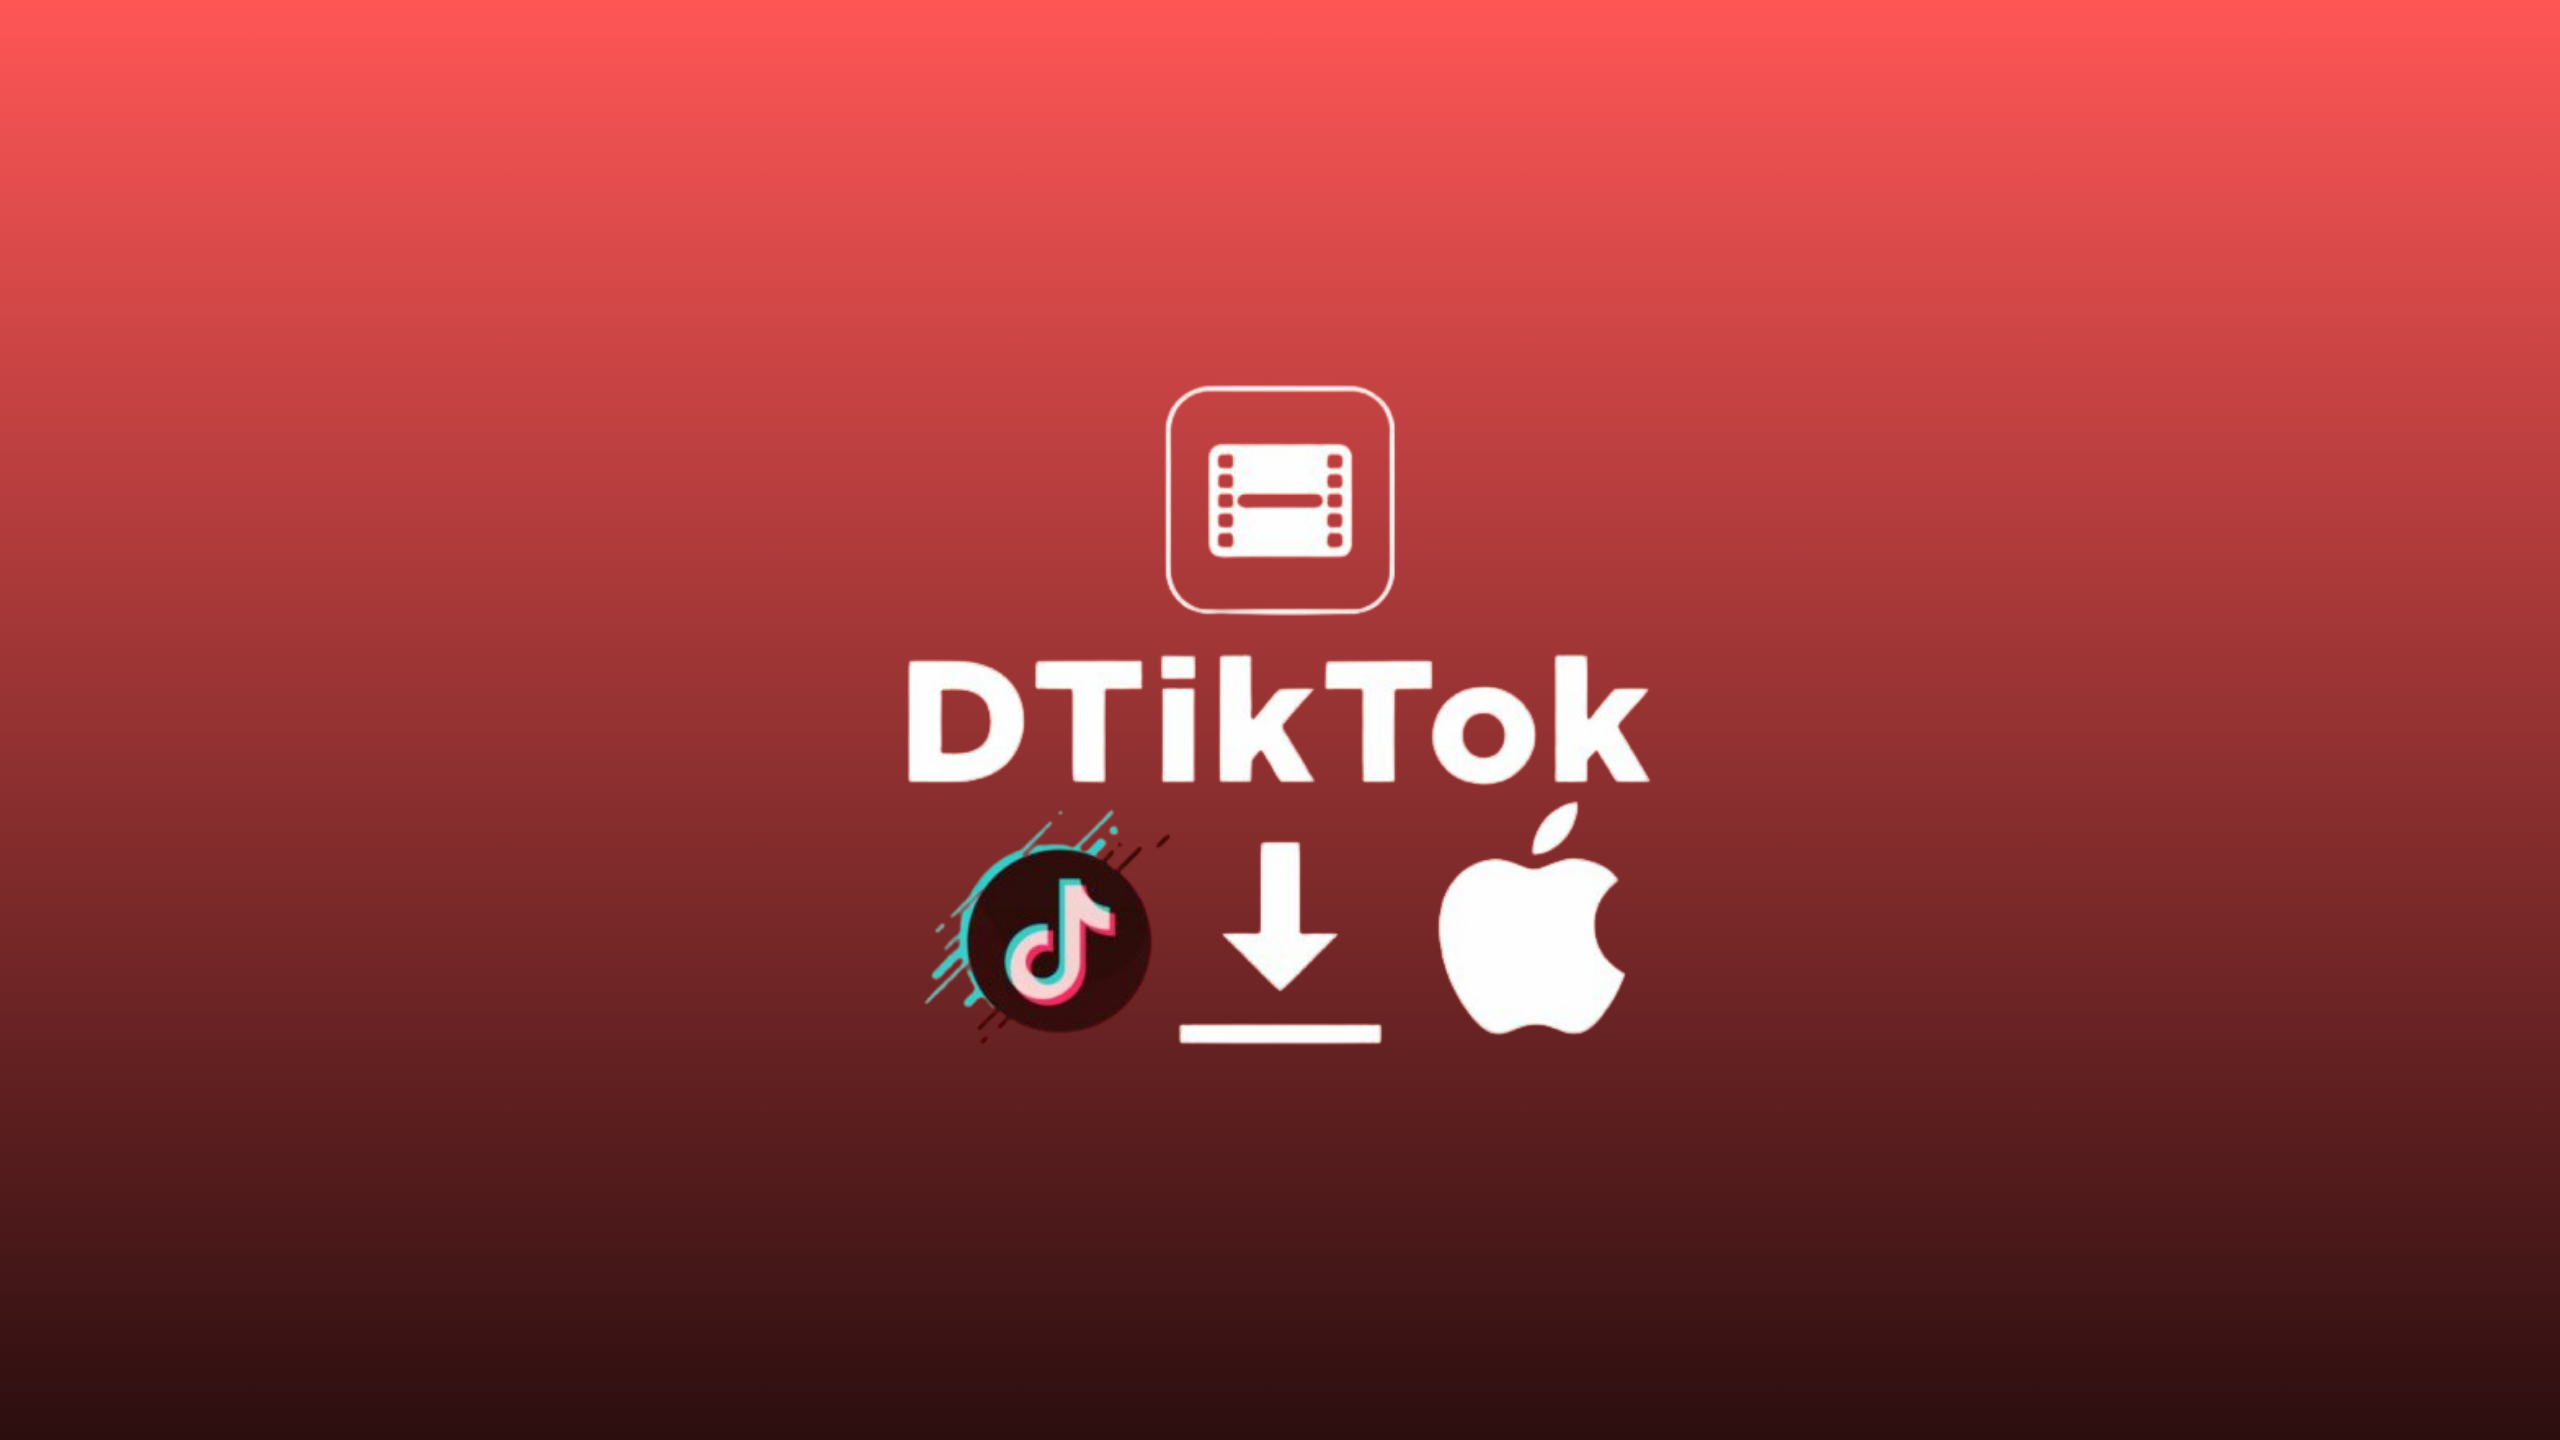 DTikTok is a shortcut for IOS